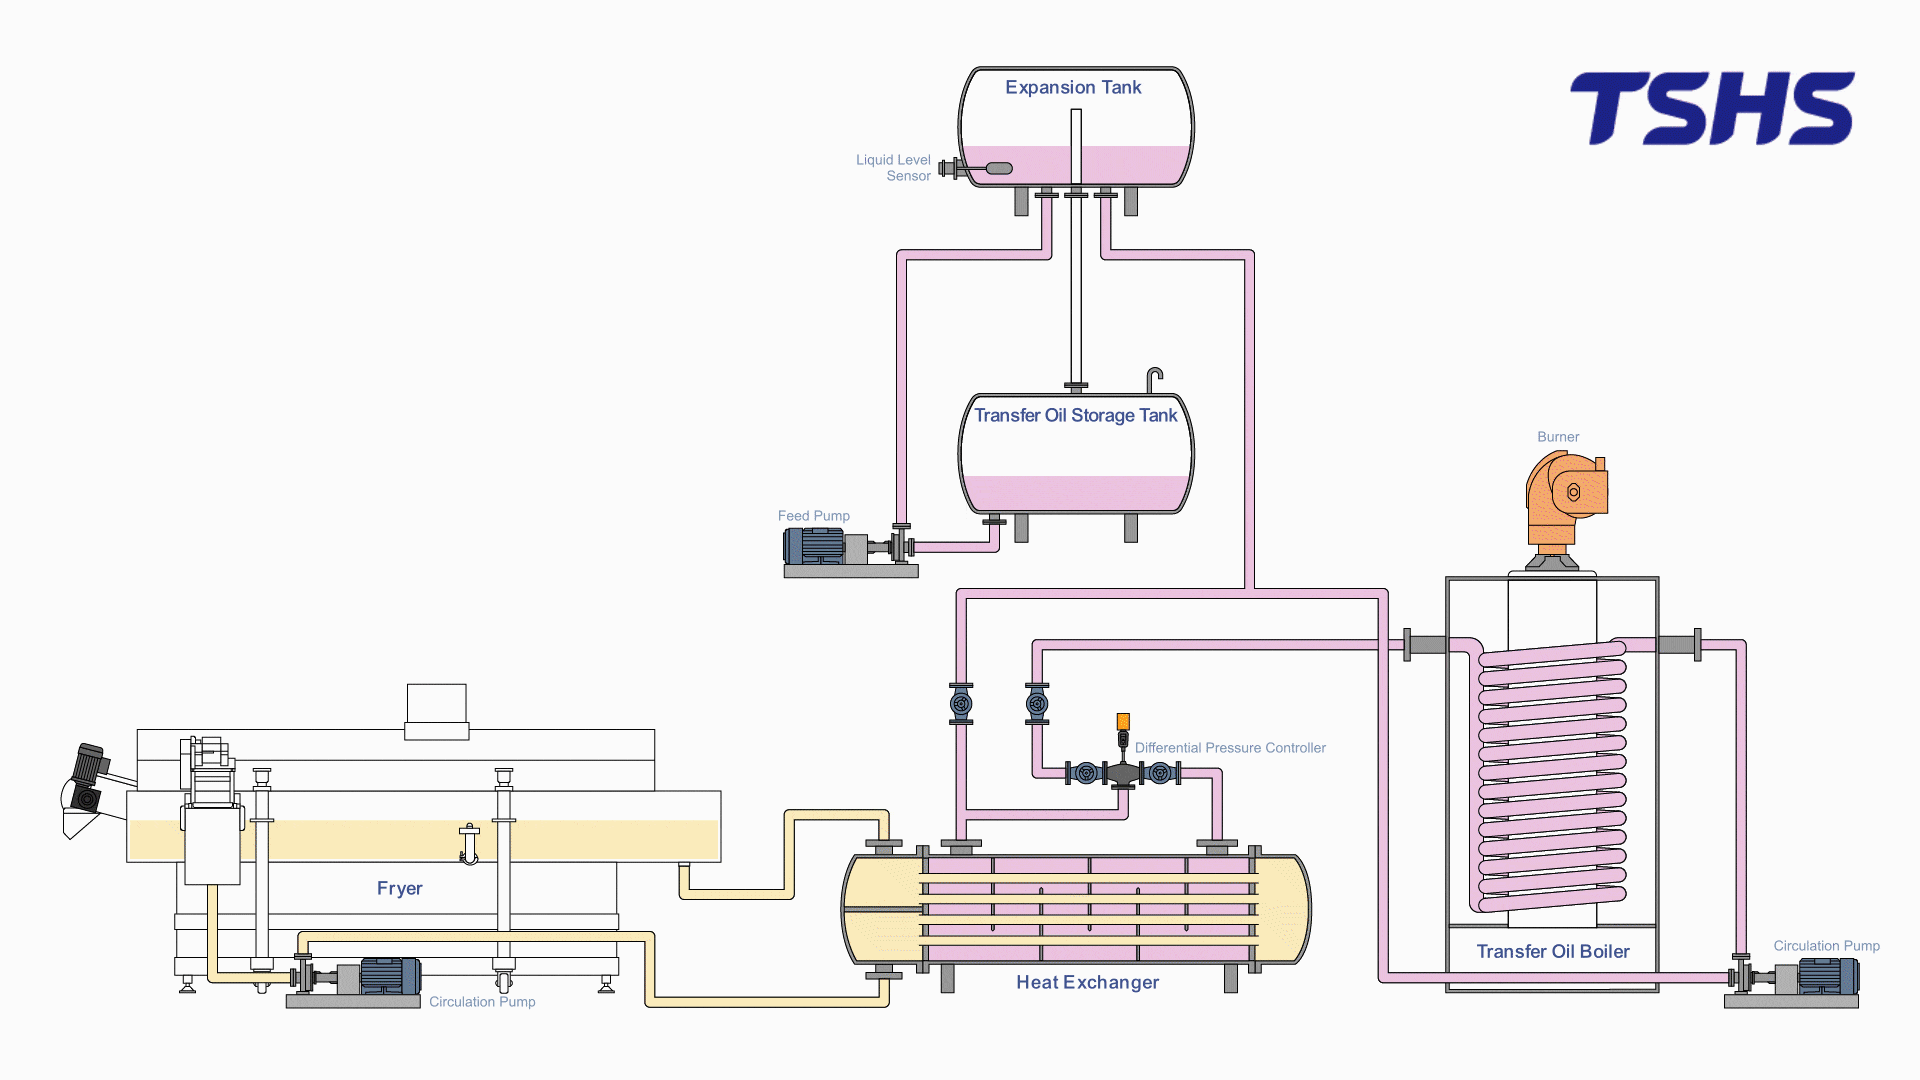 Heat Exchange System Heating - Expansion Tank Supplement